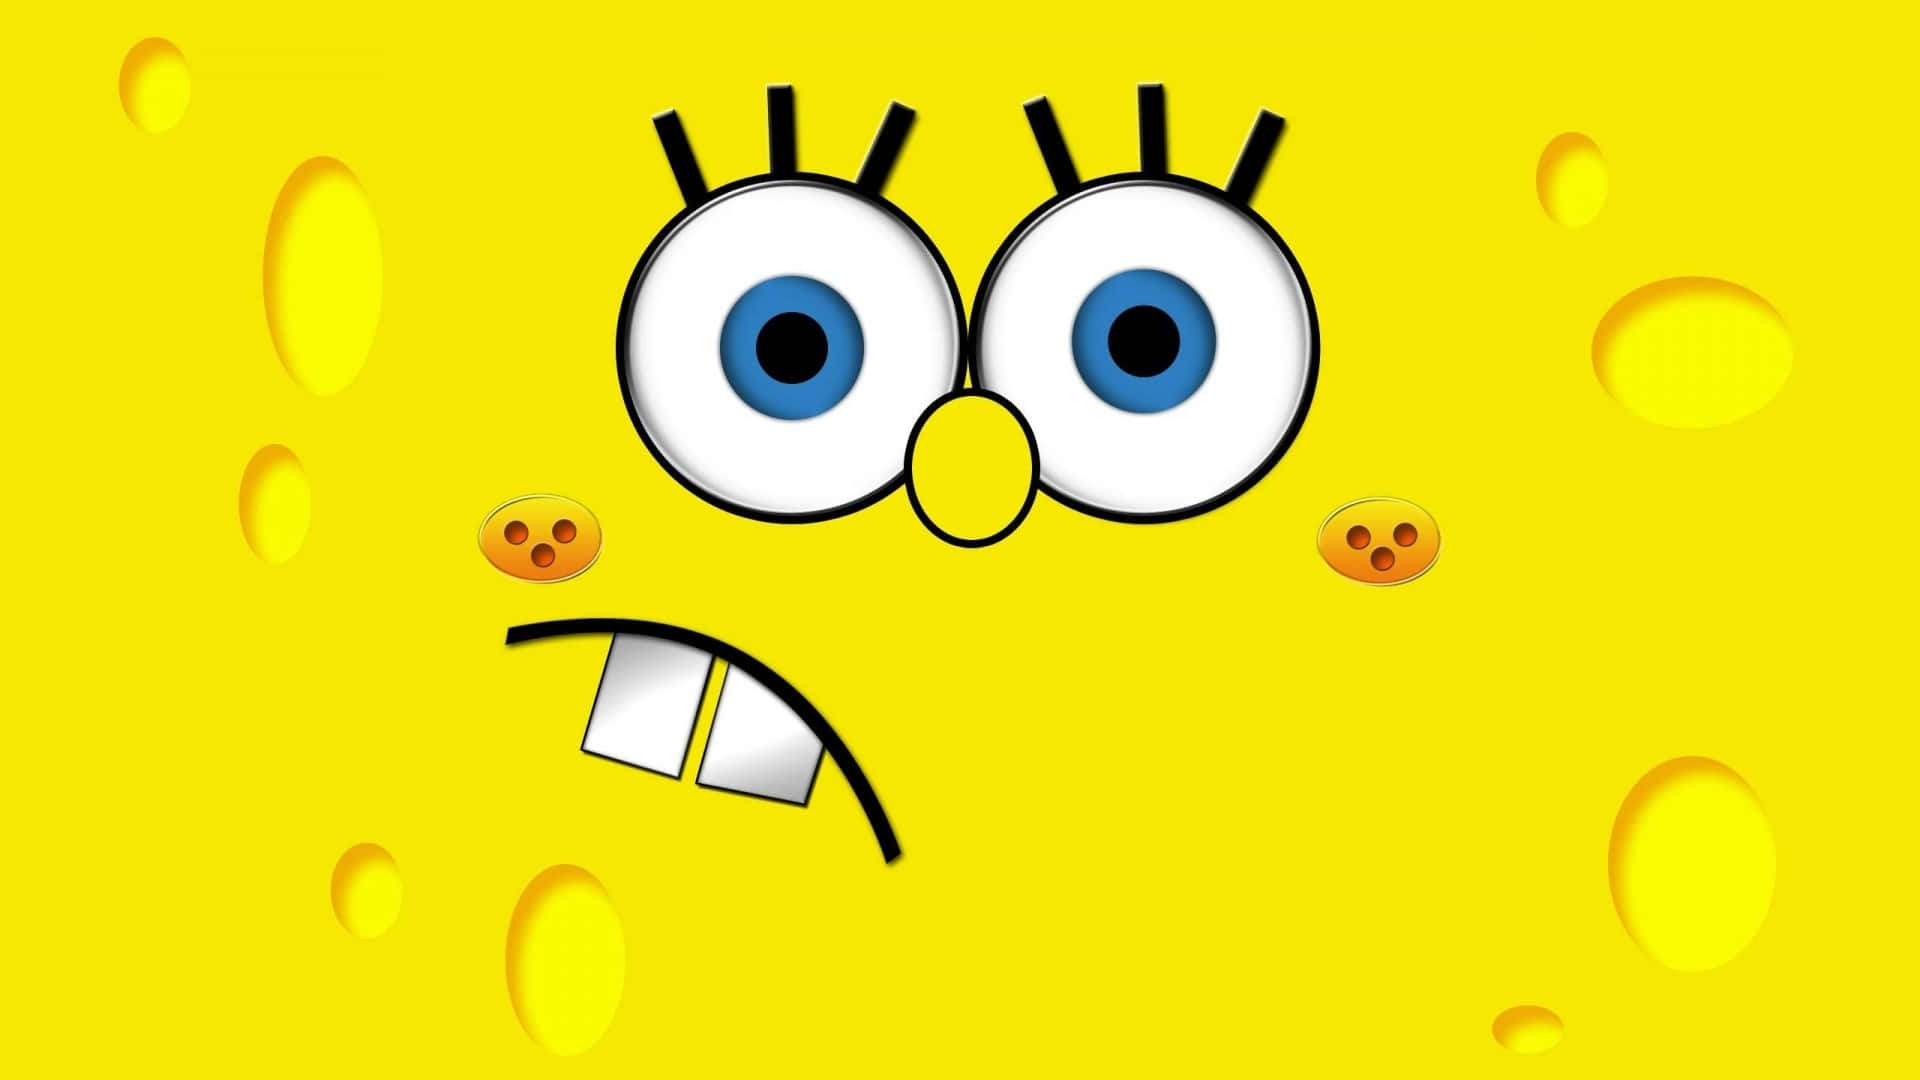 Show off your Spongebob Face Wallpaper